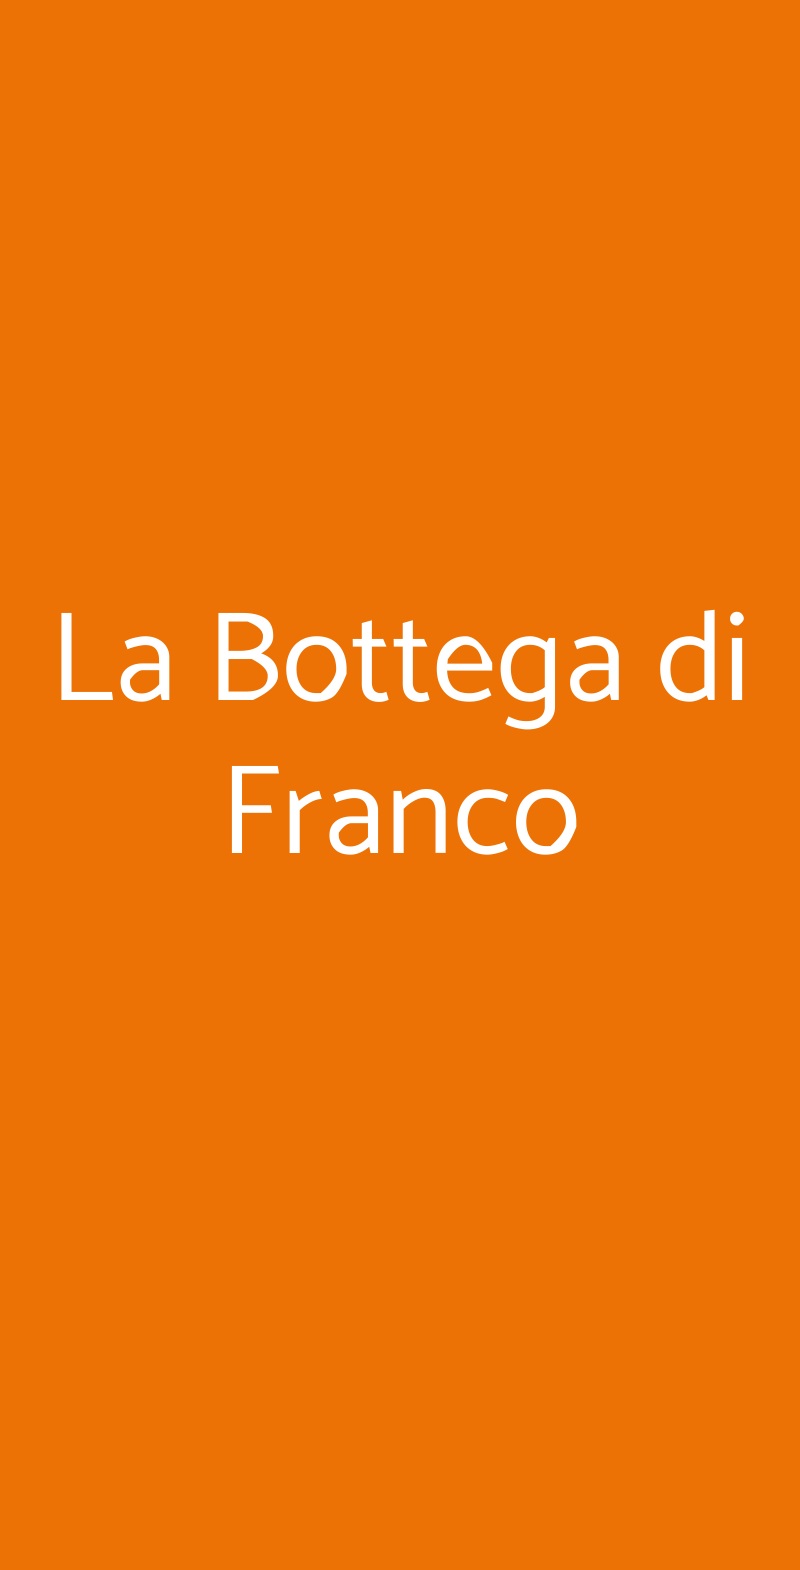 La Bottega di Franco Bologna menù 1 pagina